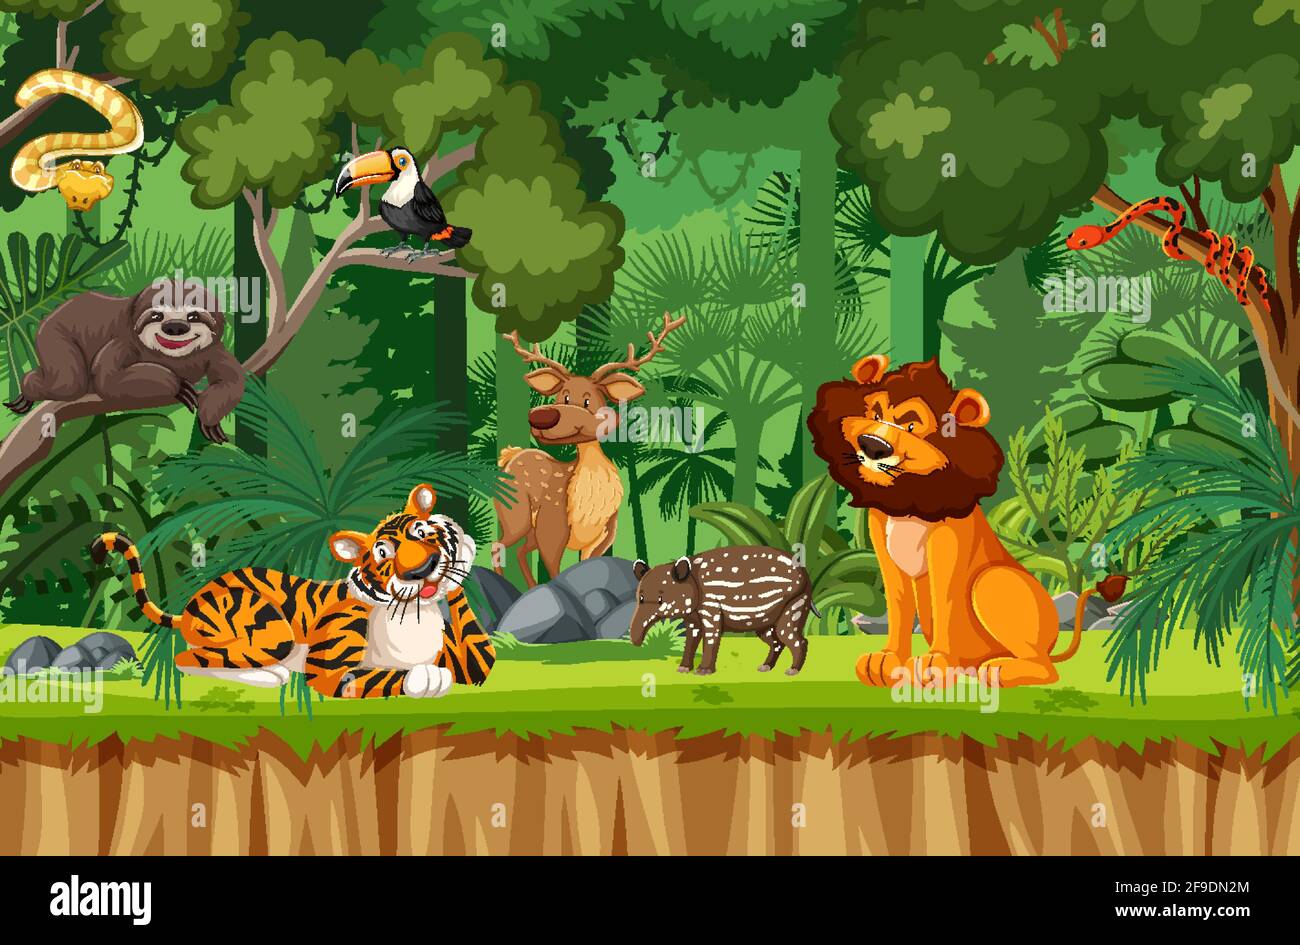 Wild animal cartoon character in the forest scene illustration Stock Vector  Image & Art - Alamy